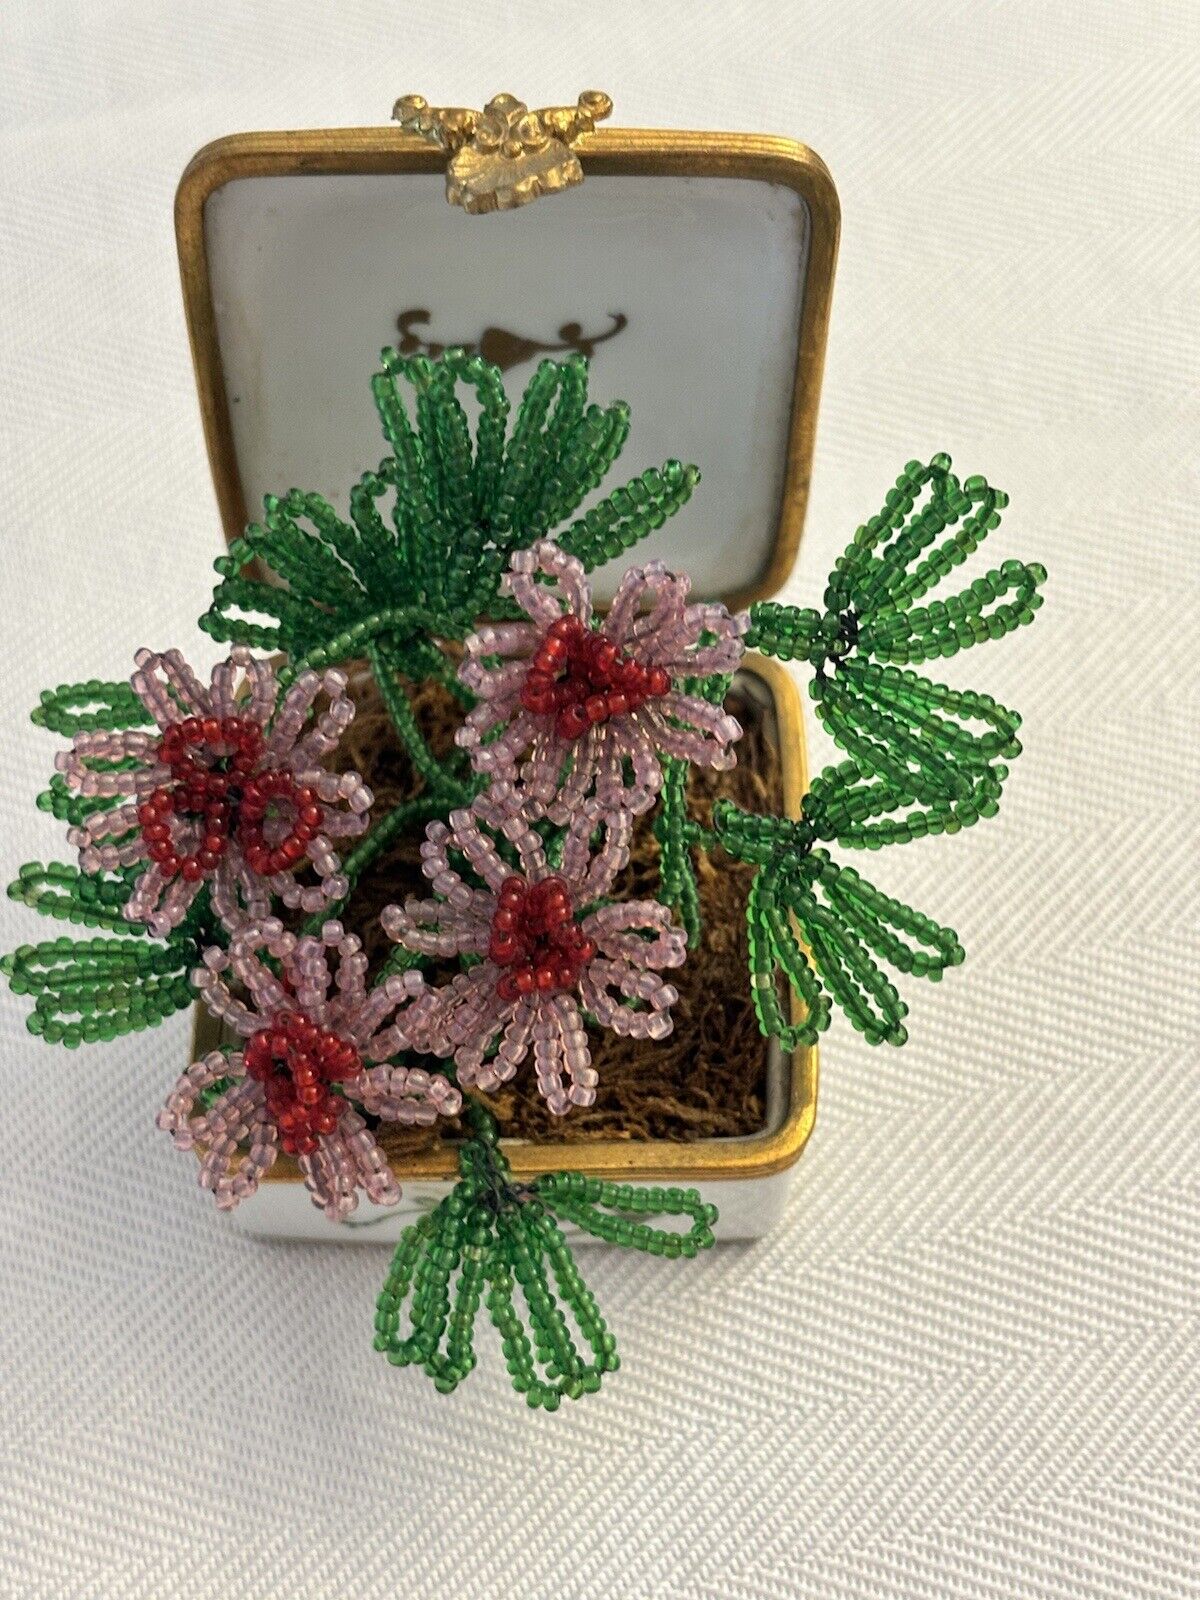 Vintage Limoges Flower Trinket Box Made In France for Bonwit Teller. Just Lovely